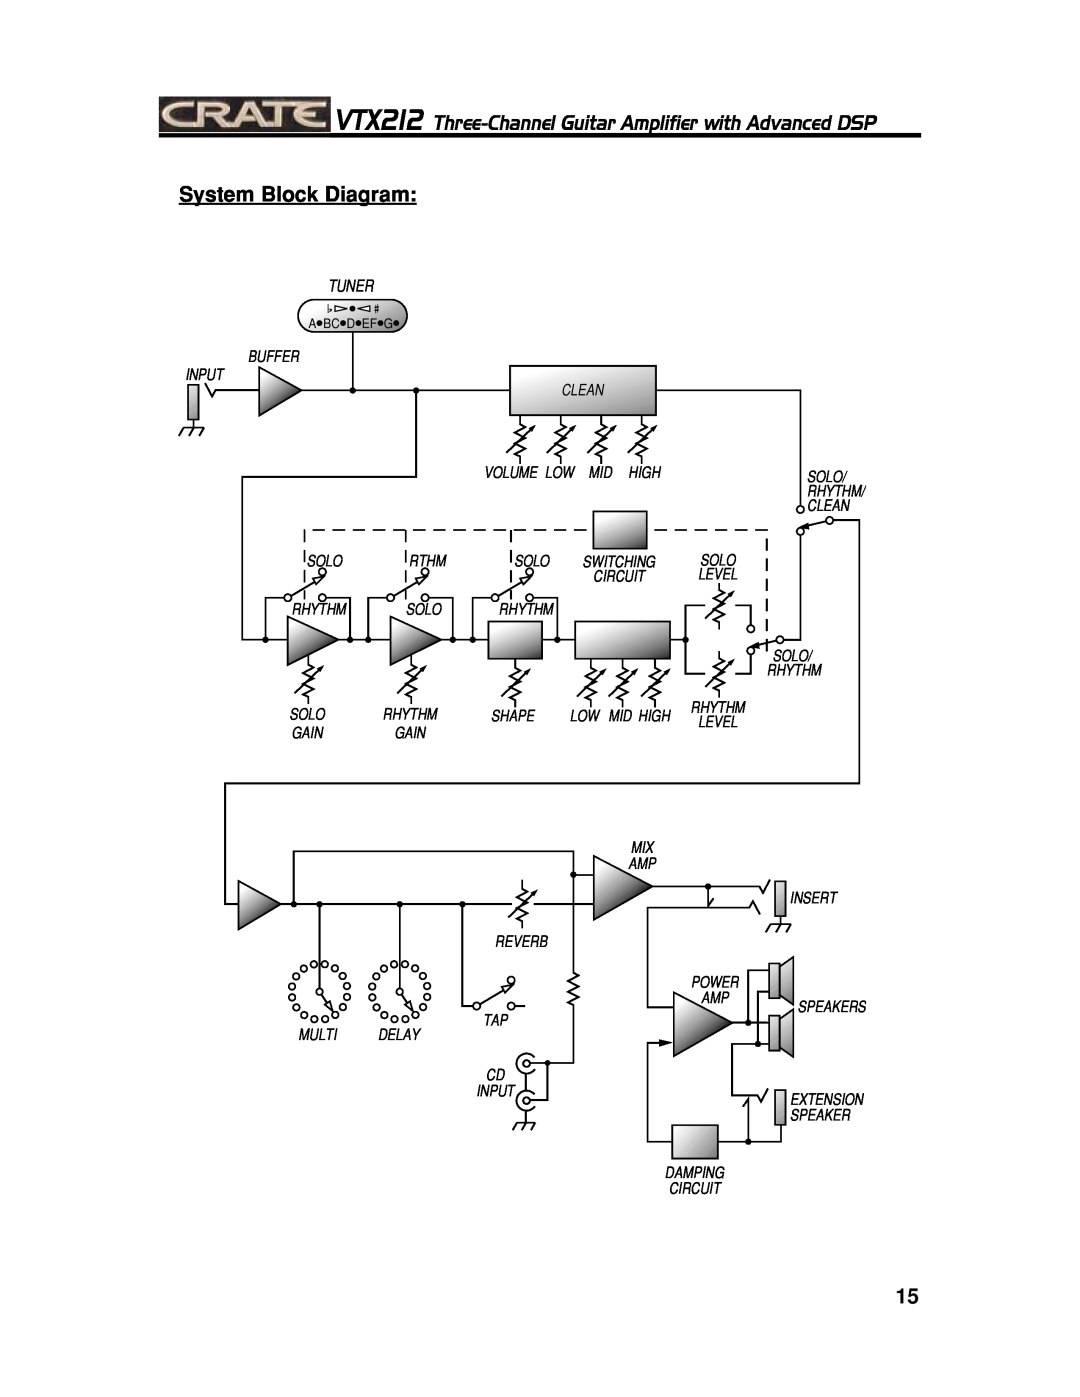 Crate Amplifiers VTX212 manual System Block Diagram, Tuner 